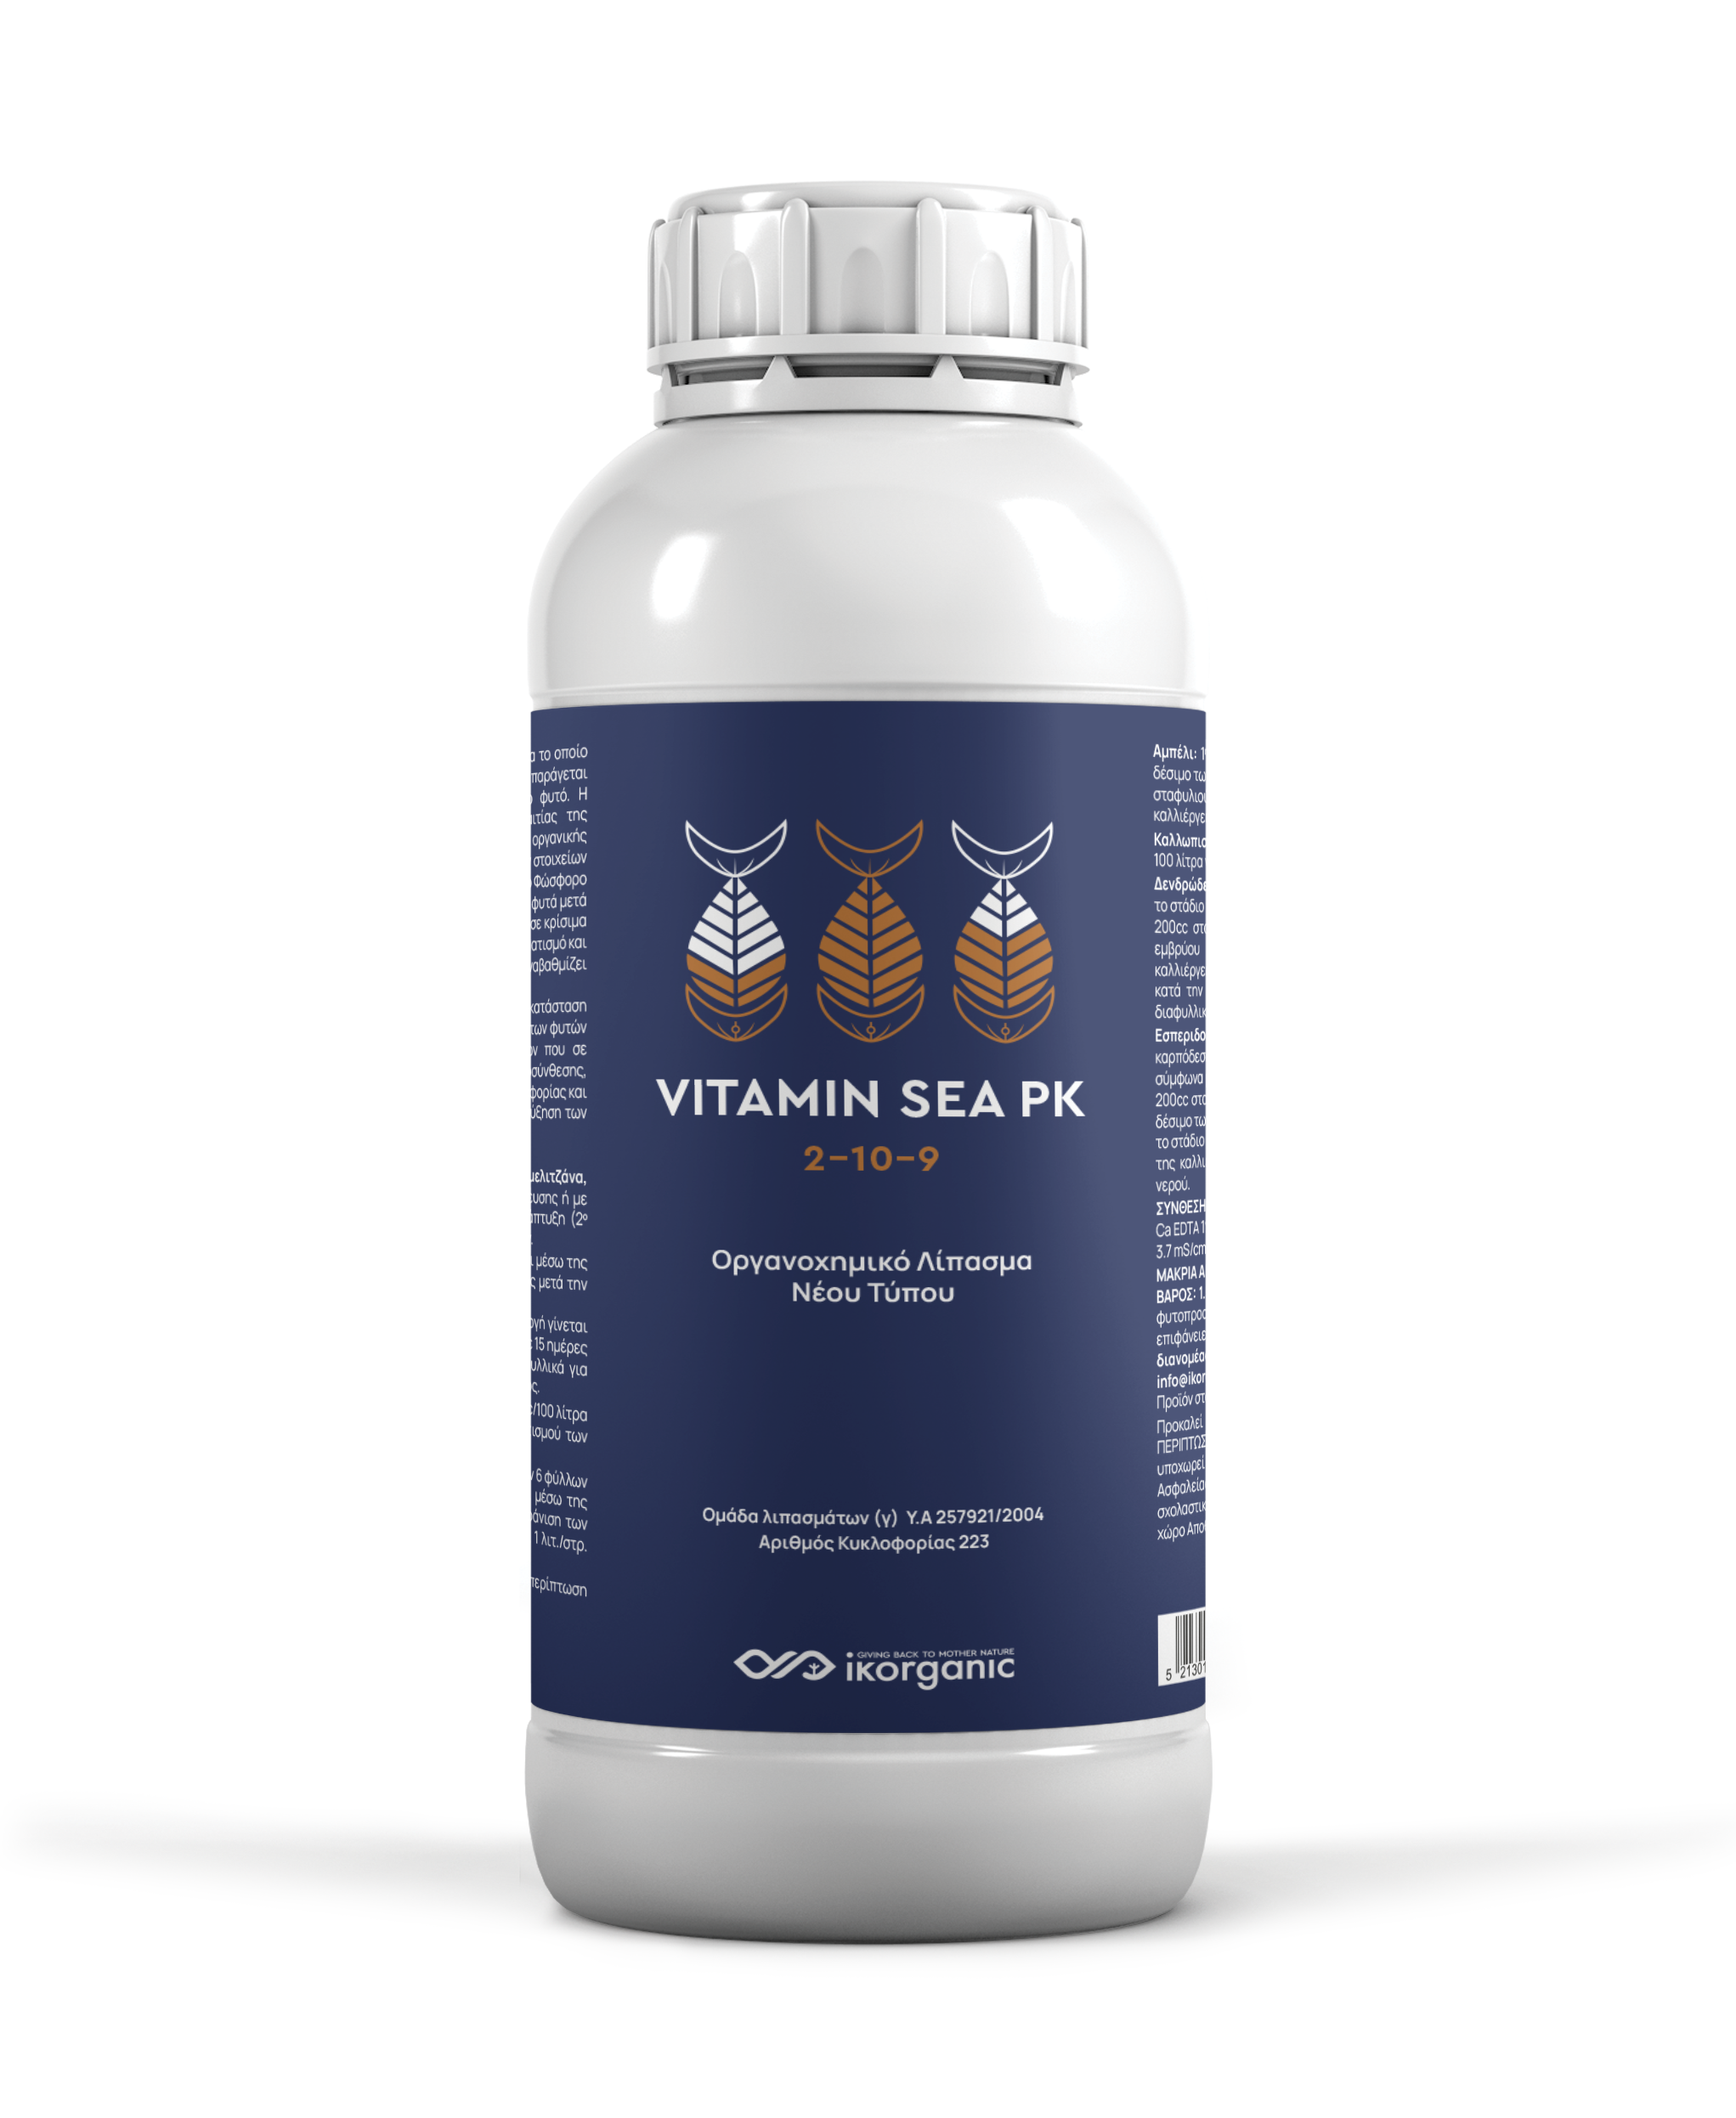 Vitamin Sea PK